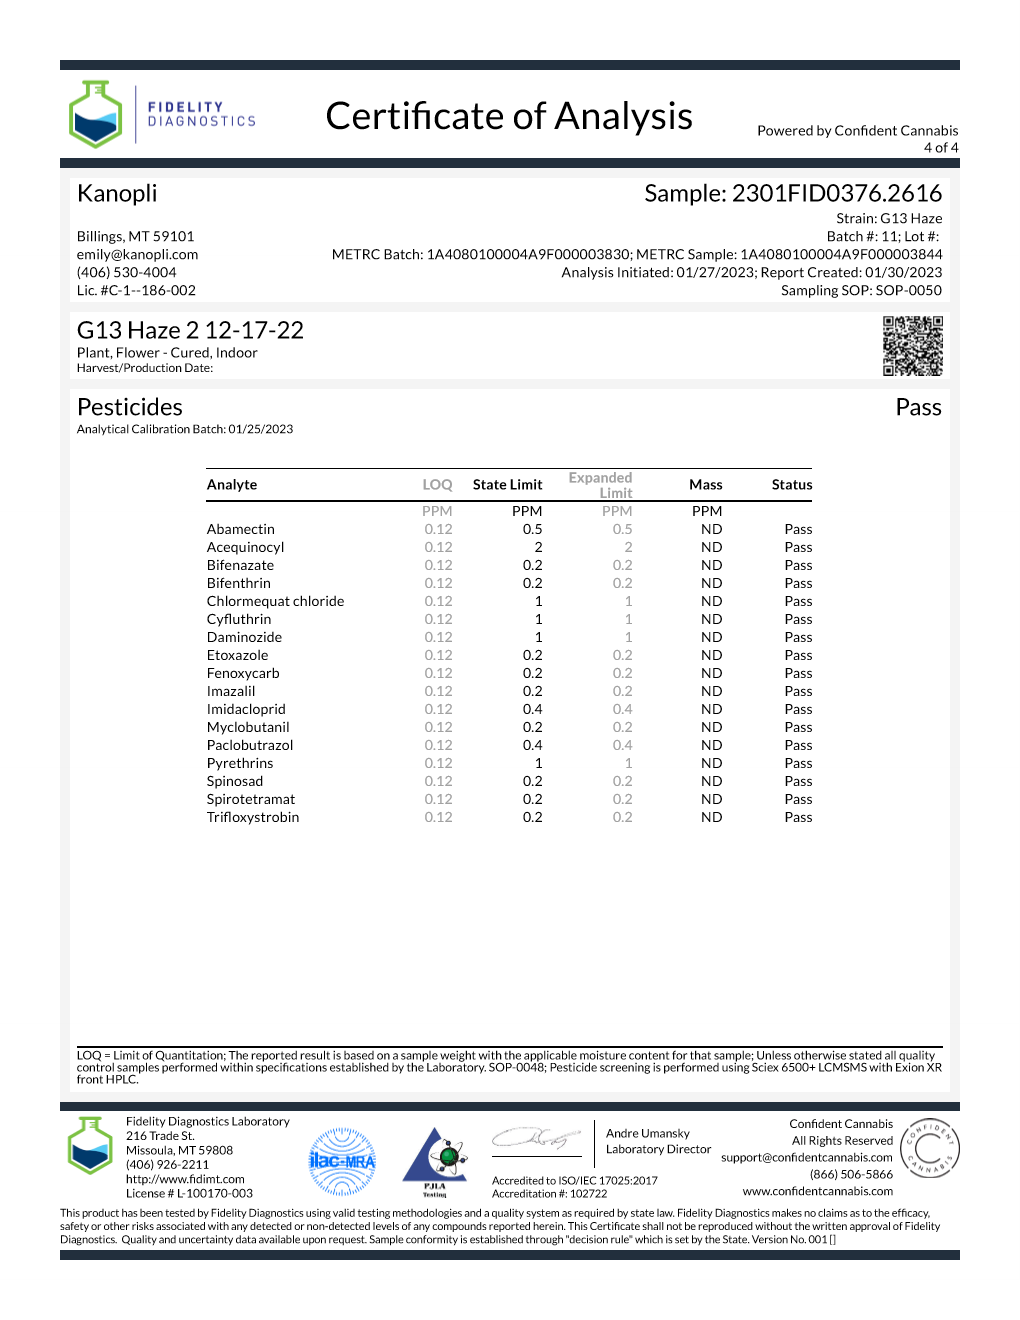 1/4 oz. G13 Haze 2 - Hybrid bud (19.75% THC) Dec. 2022 (7 grams)